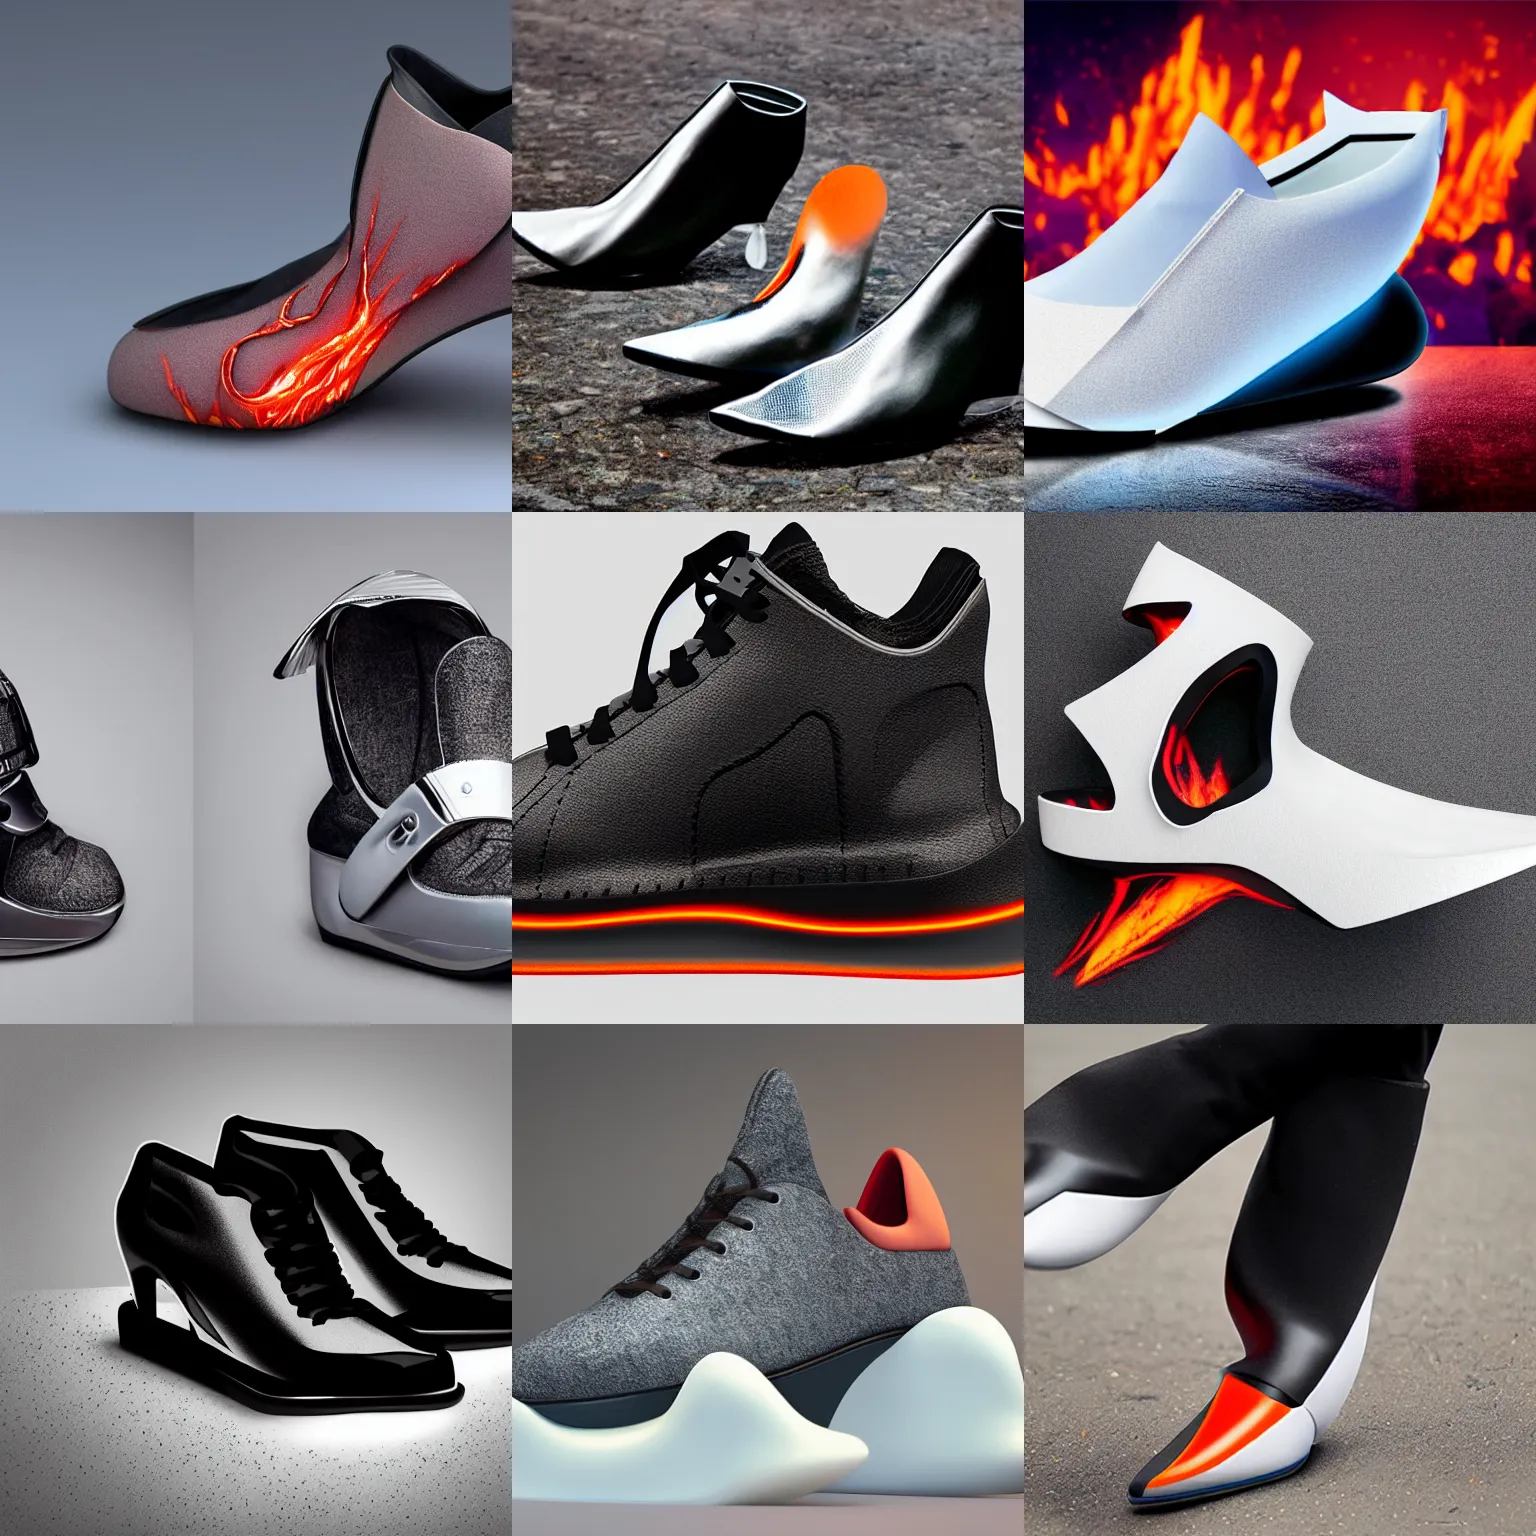 Prompt: Futuristic shoe inspired by volcano studio lightning